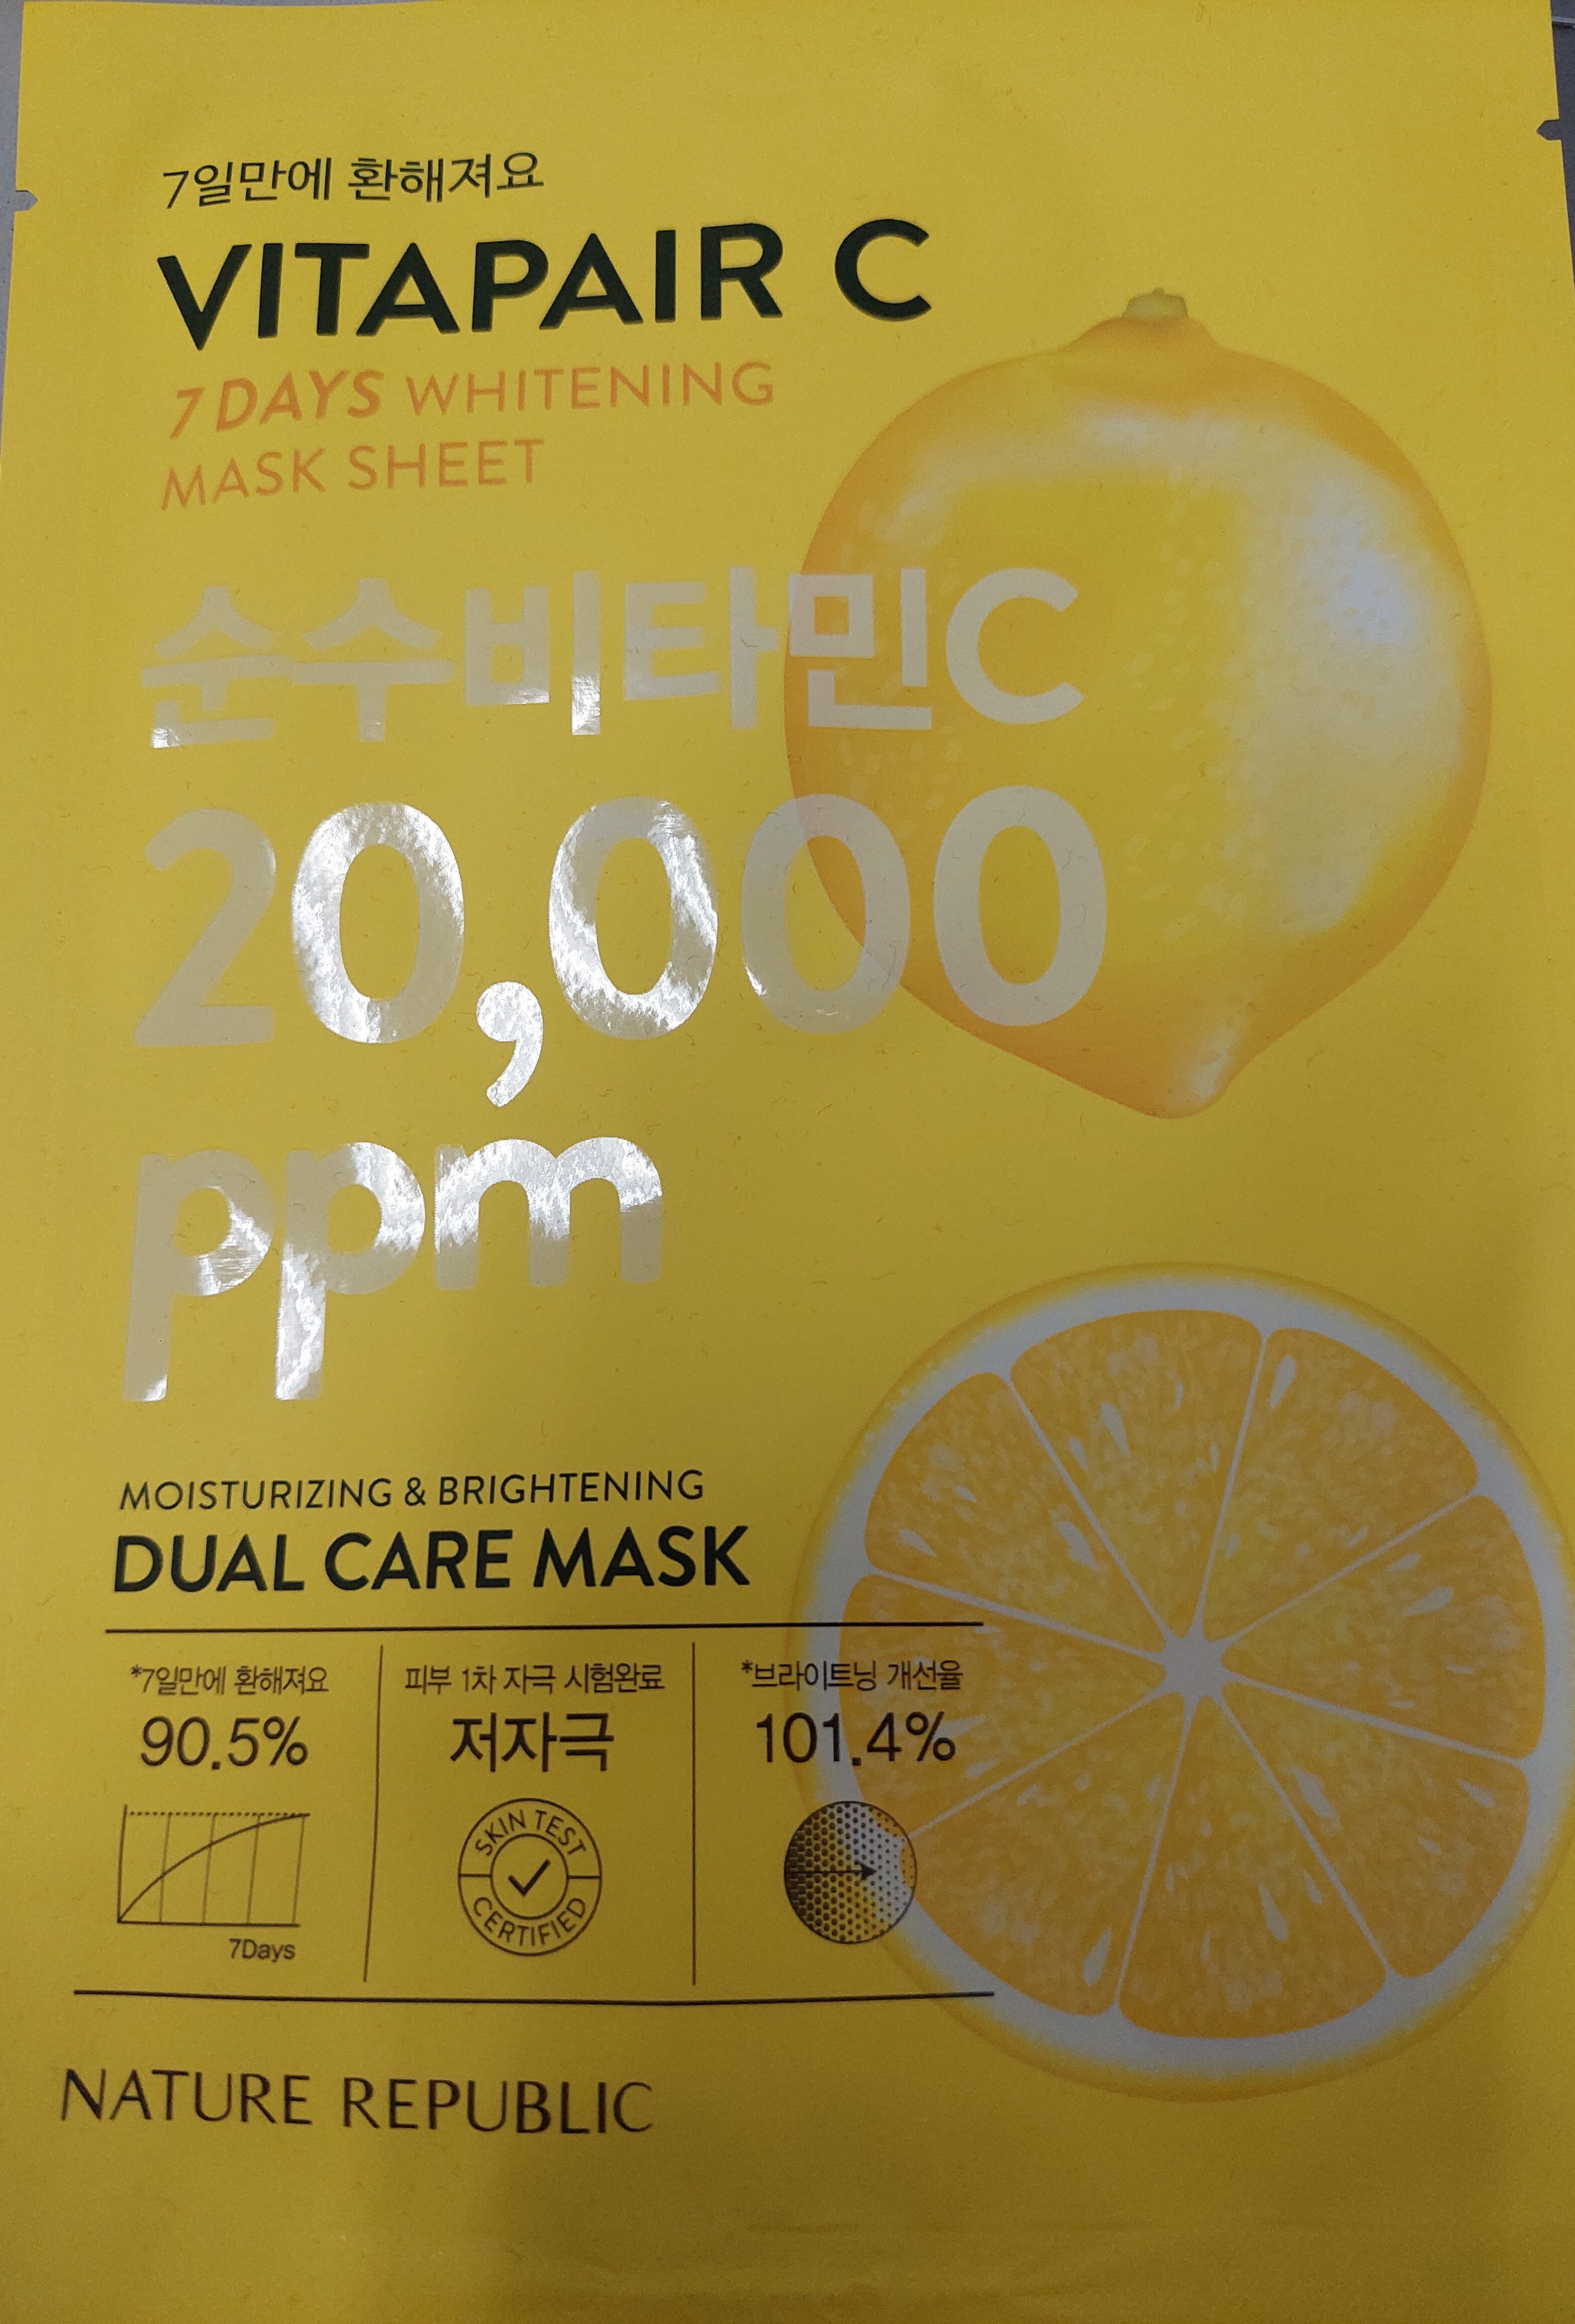 Vitapair C Mask Sheet - Produkt - en